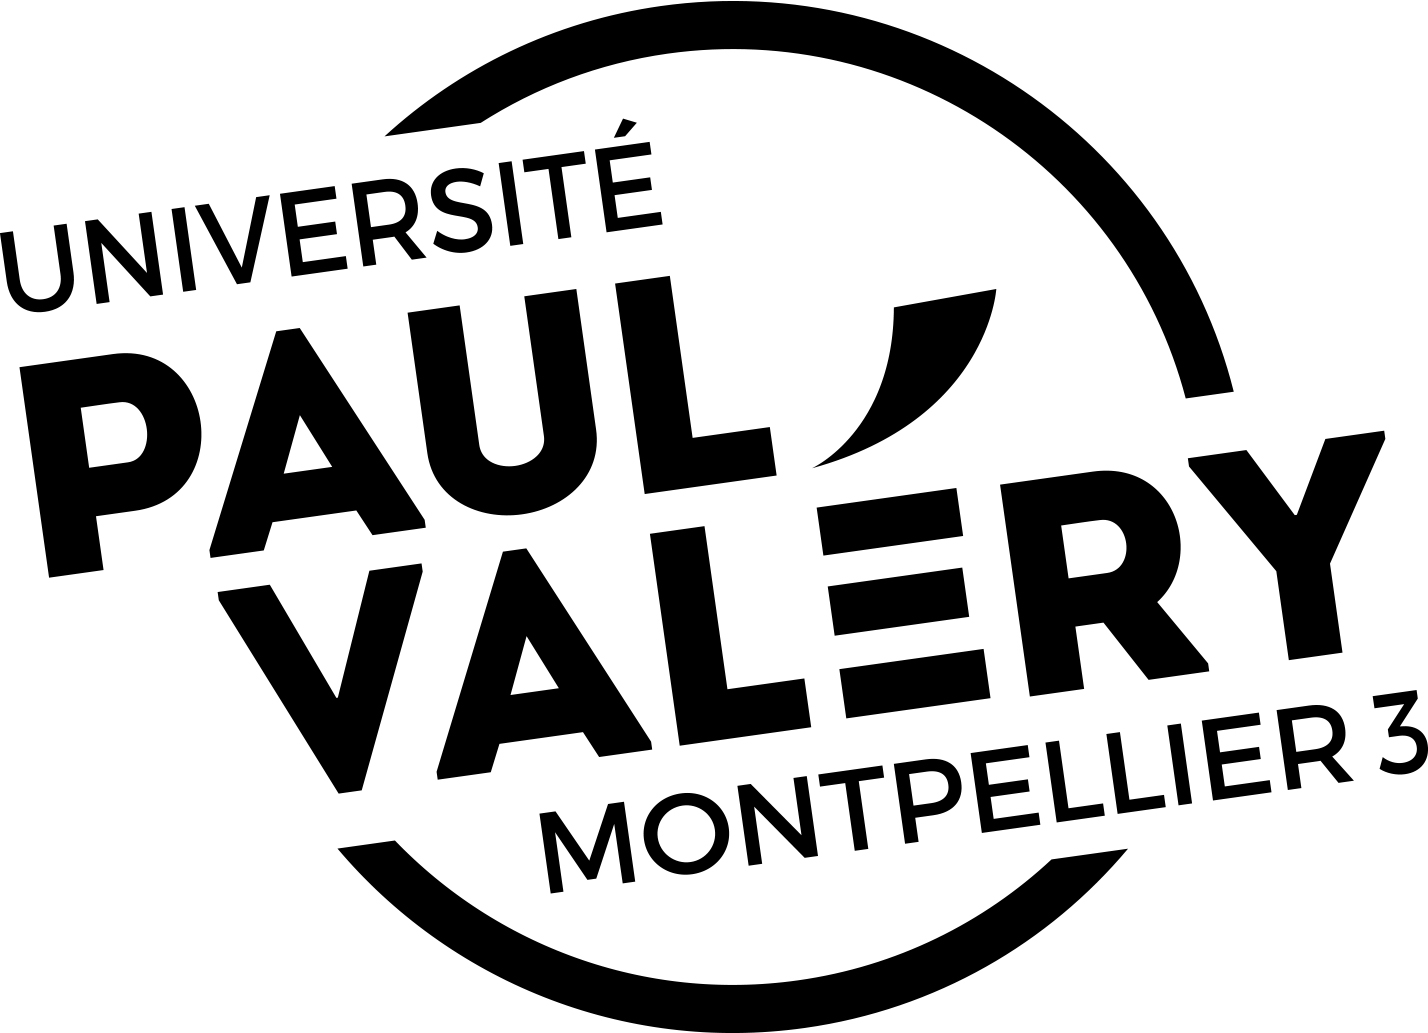 Université Paul-valéry Montpellier 3 logo